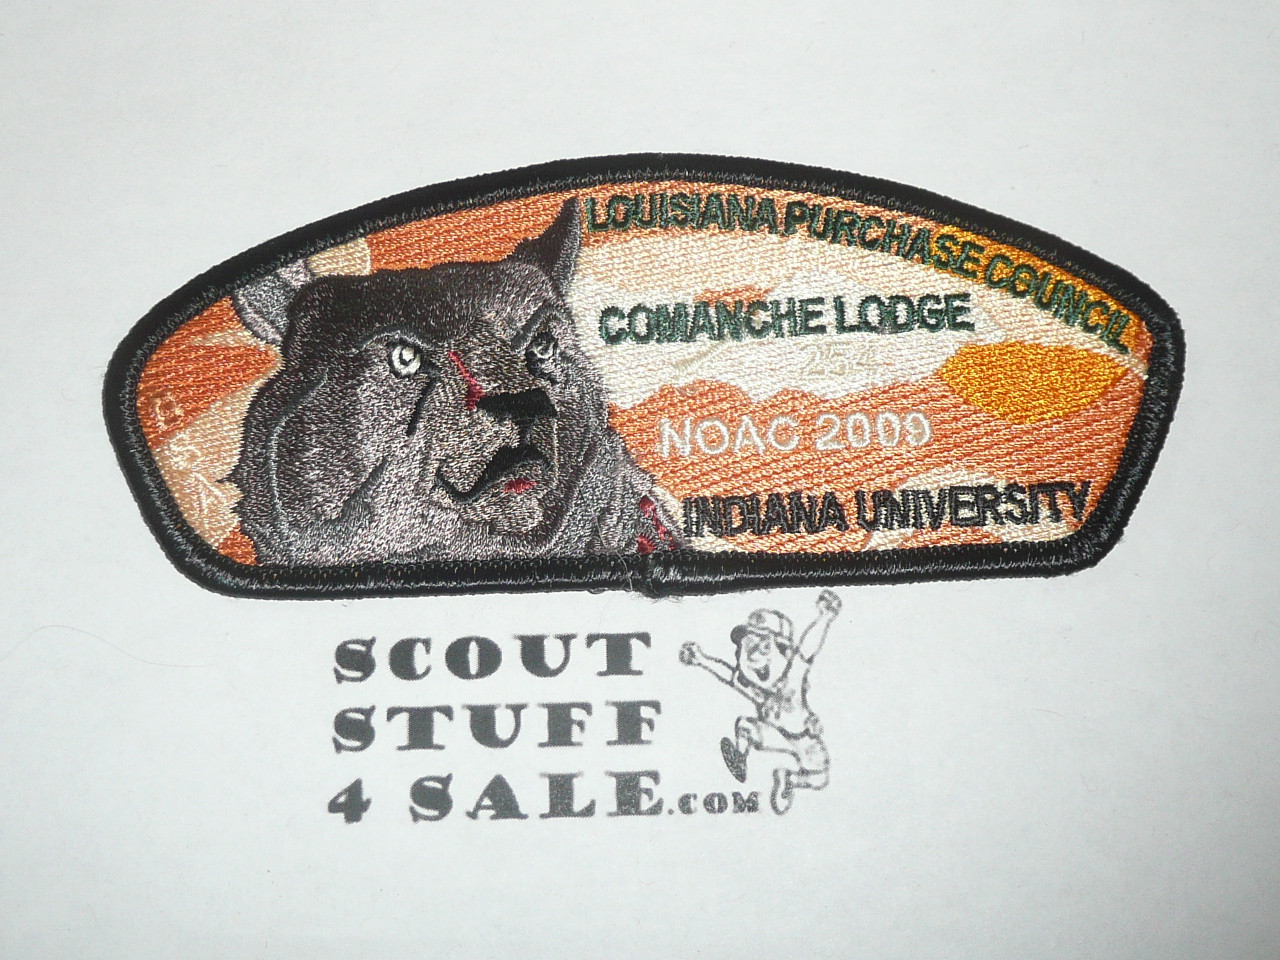 Louisiana Purchase Council sa17 CSP - Commanche Lodge 2009 NOAC